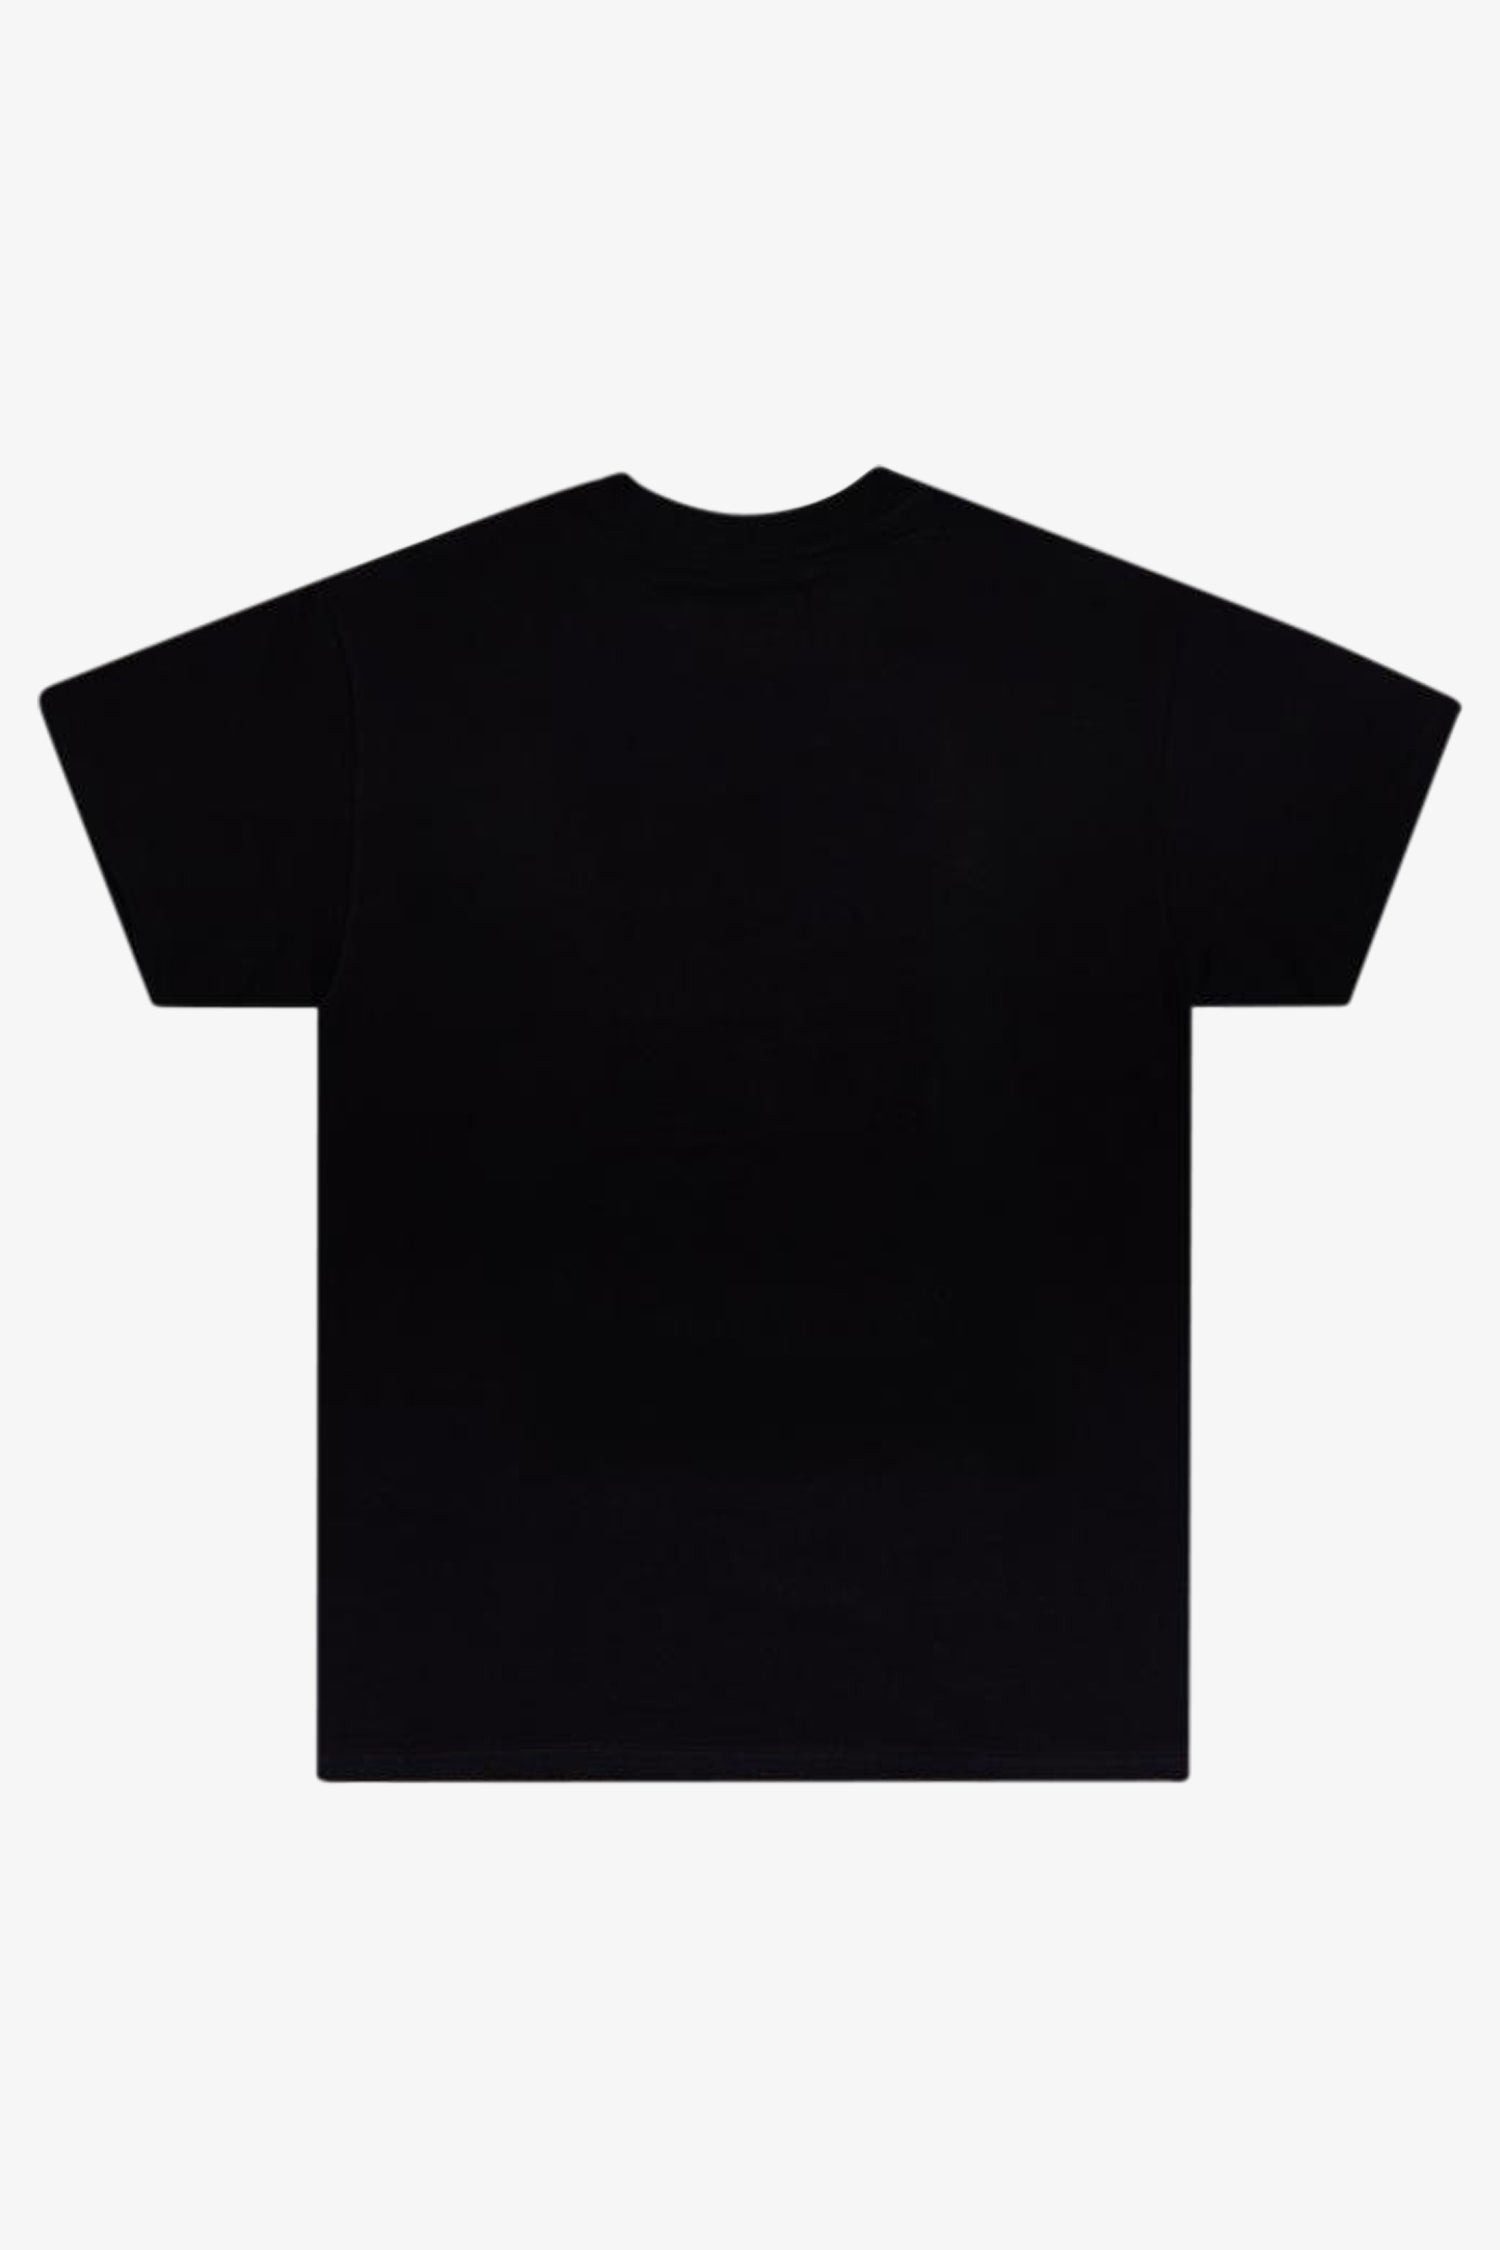 Selectshop FRAME - DREAMLAND SYNDICATE Dstr Zone Tee T-Shirts Dubai